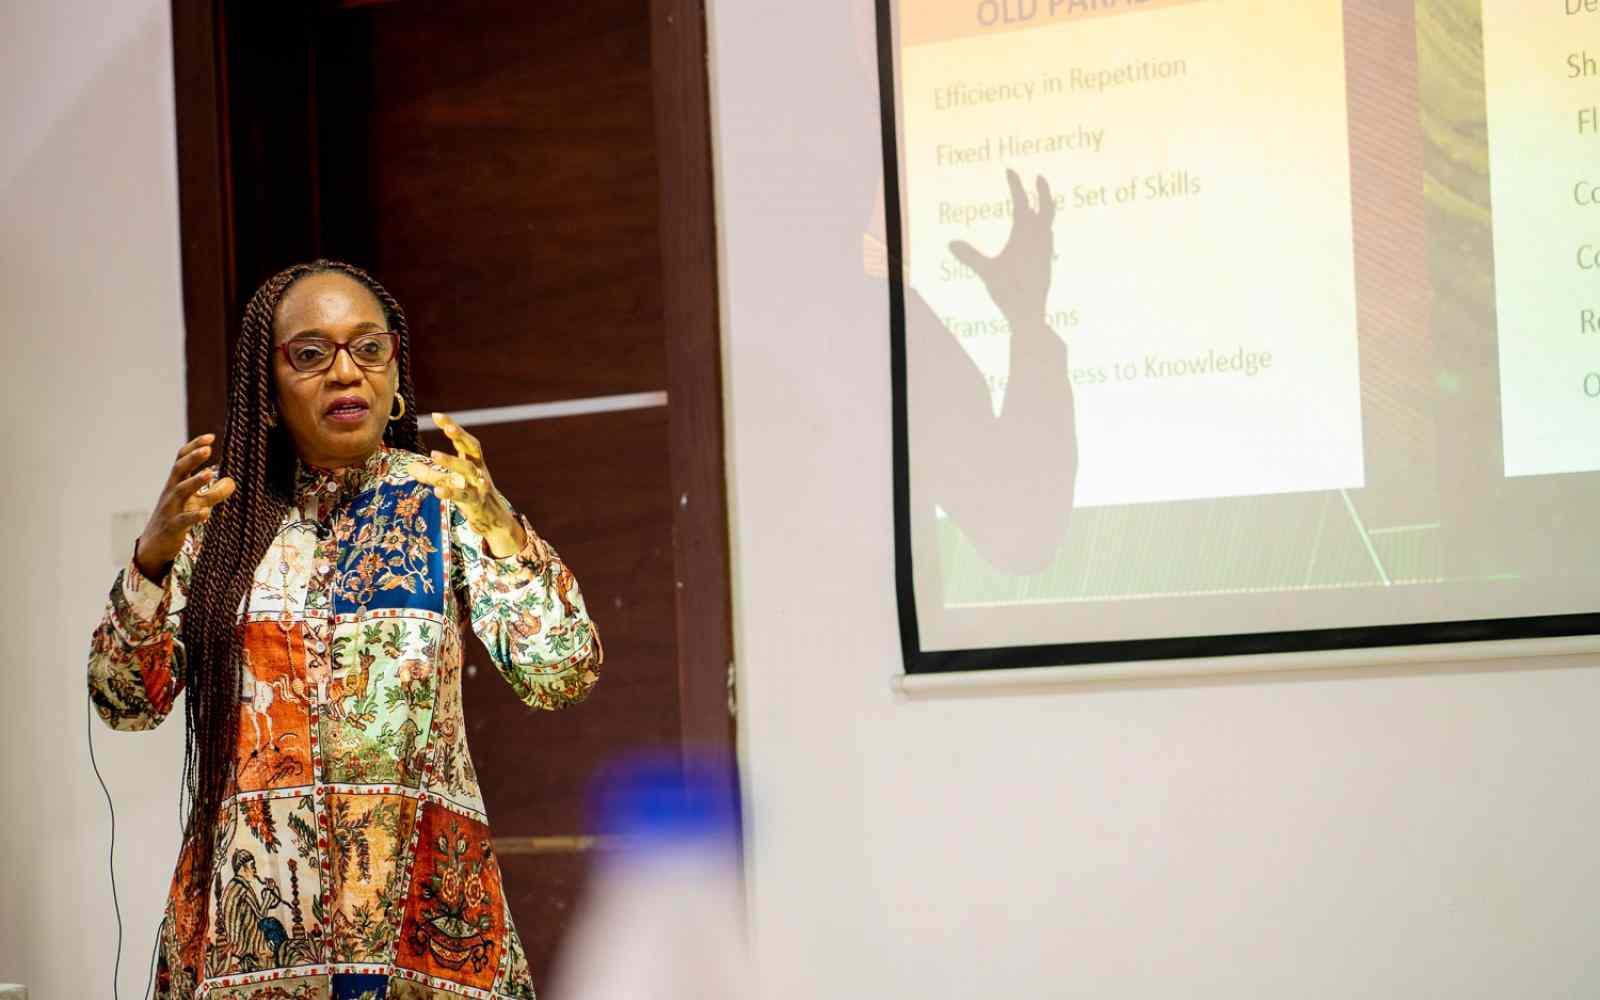 Josephine Nzerem speaking at the EACH Media conference in Lagos, Nigeria